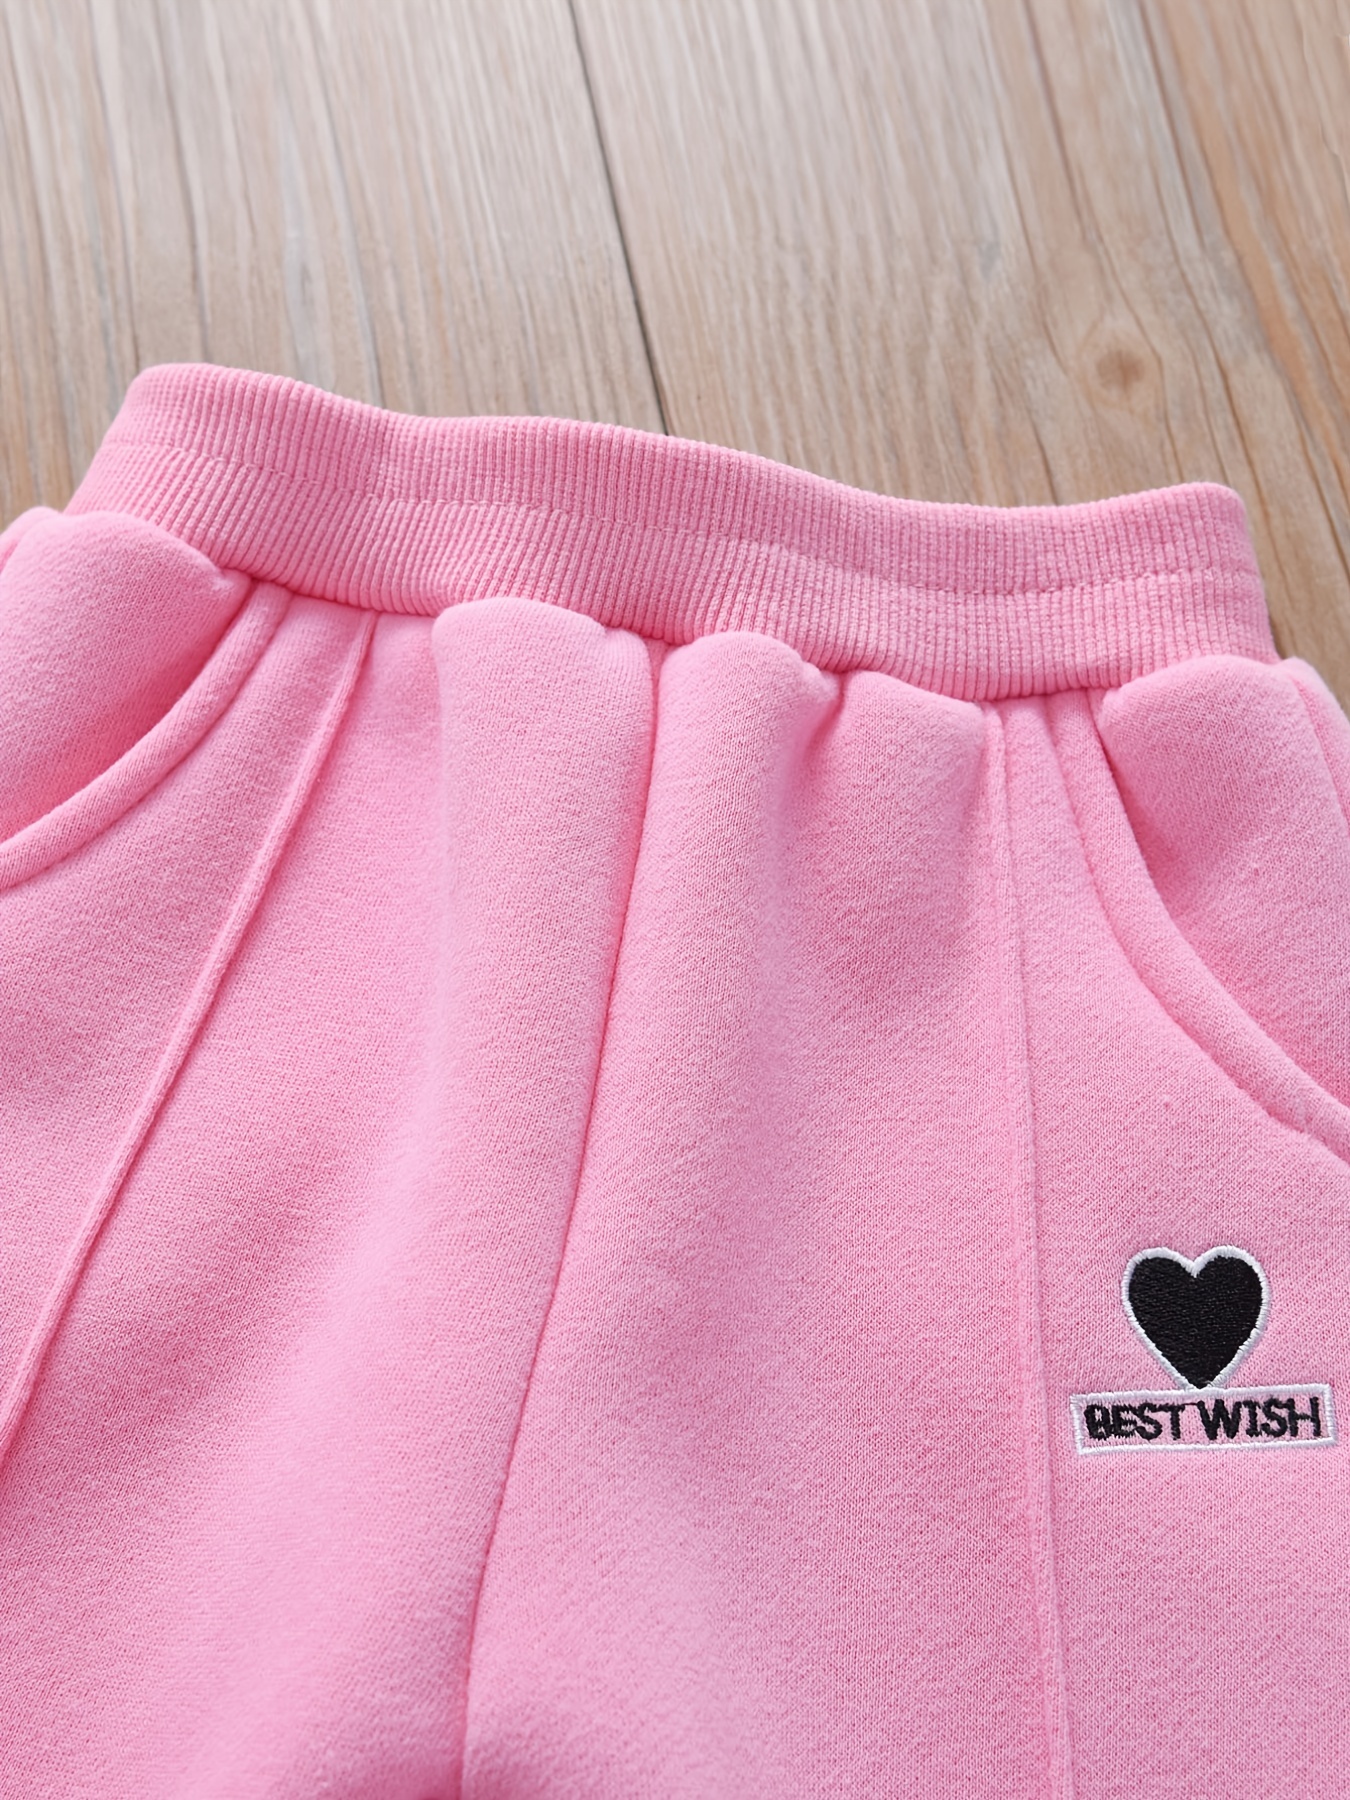 Girls' hot pink sweat pants